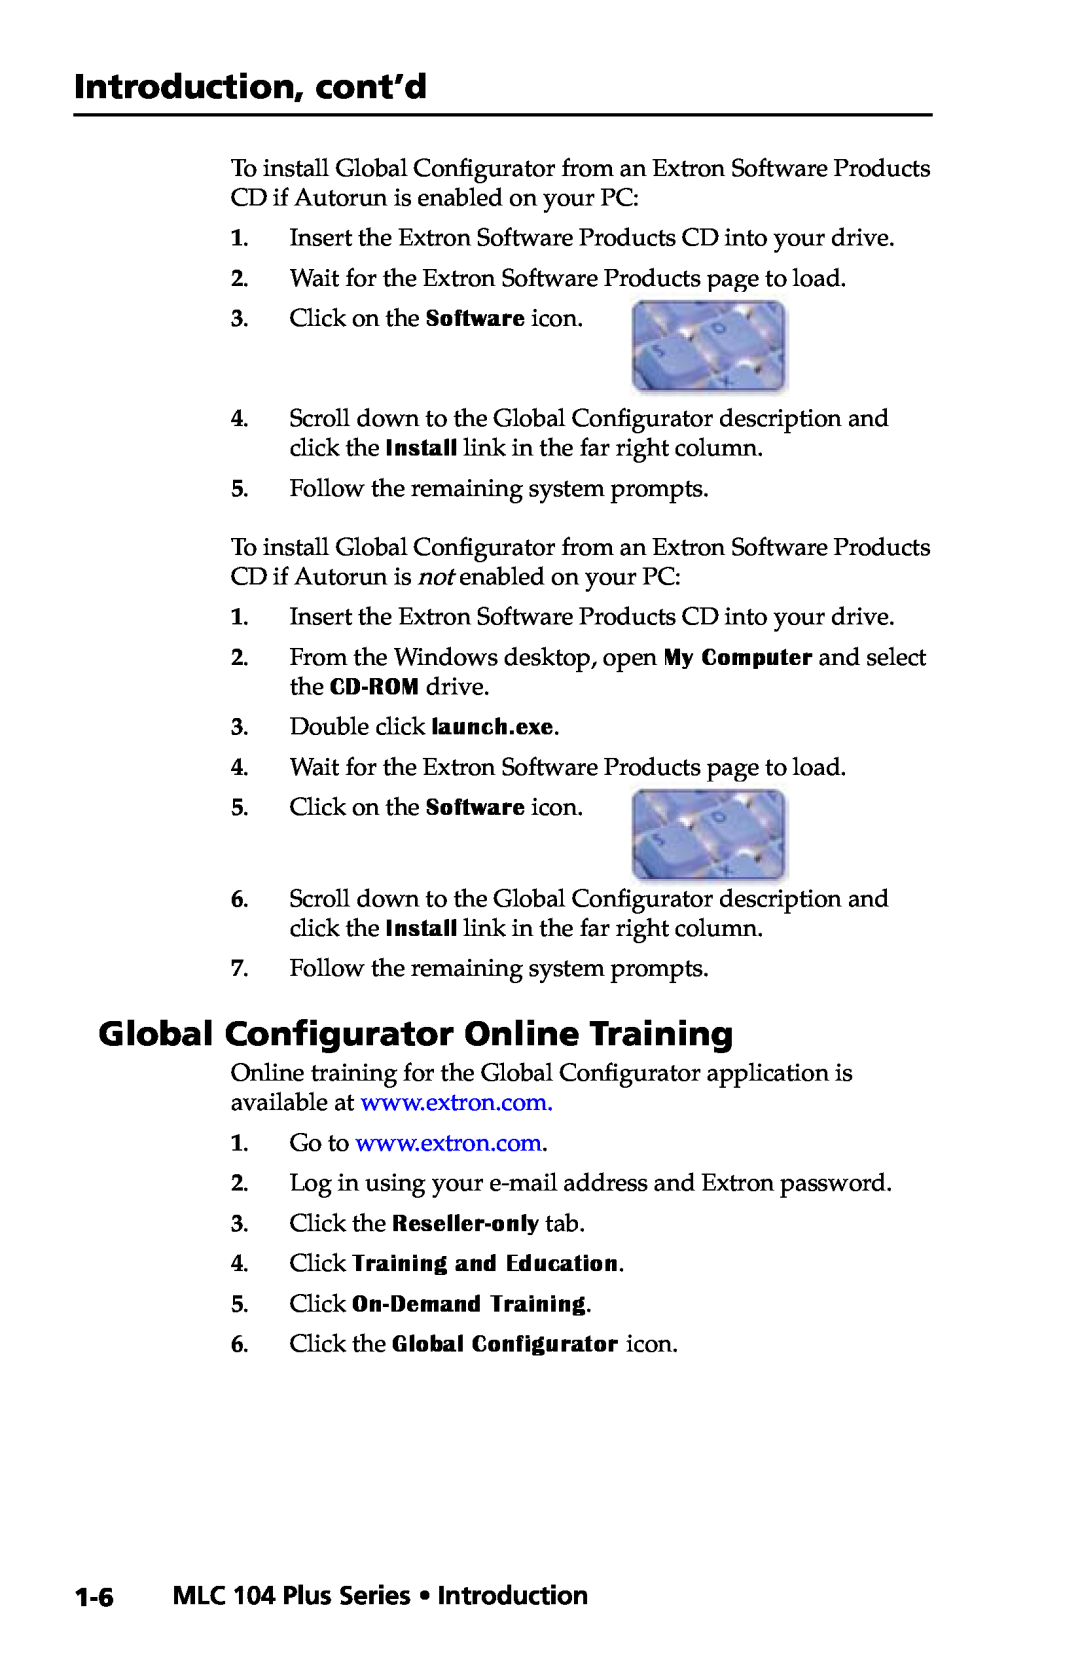 Extron electronic MLC 104 Plus Series setup guide Introduction, cont’d, Global Configurator Online Training 